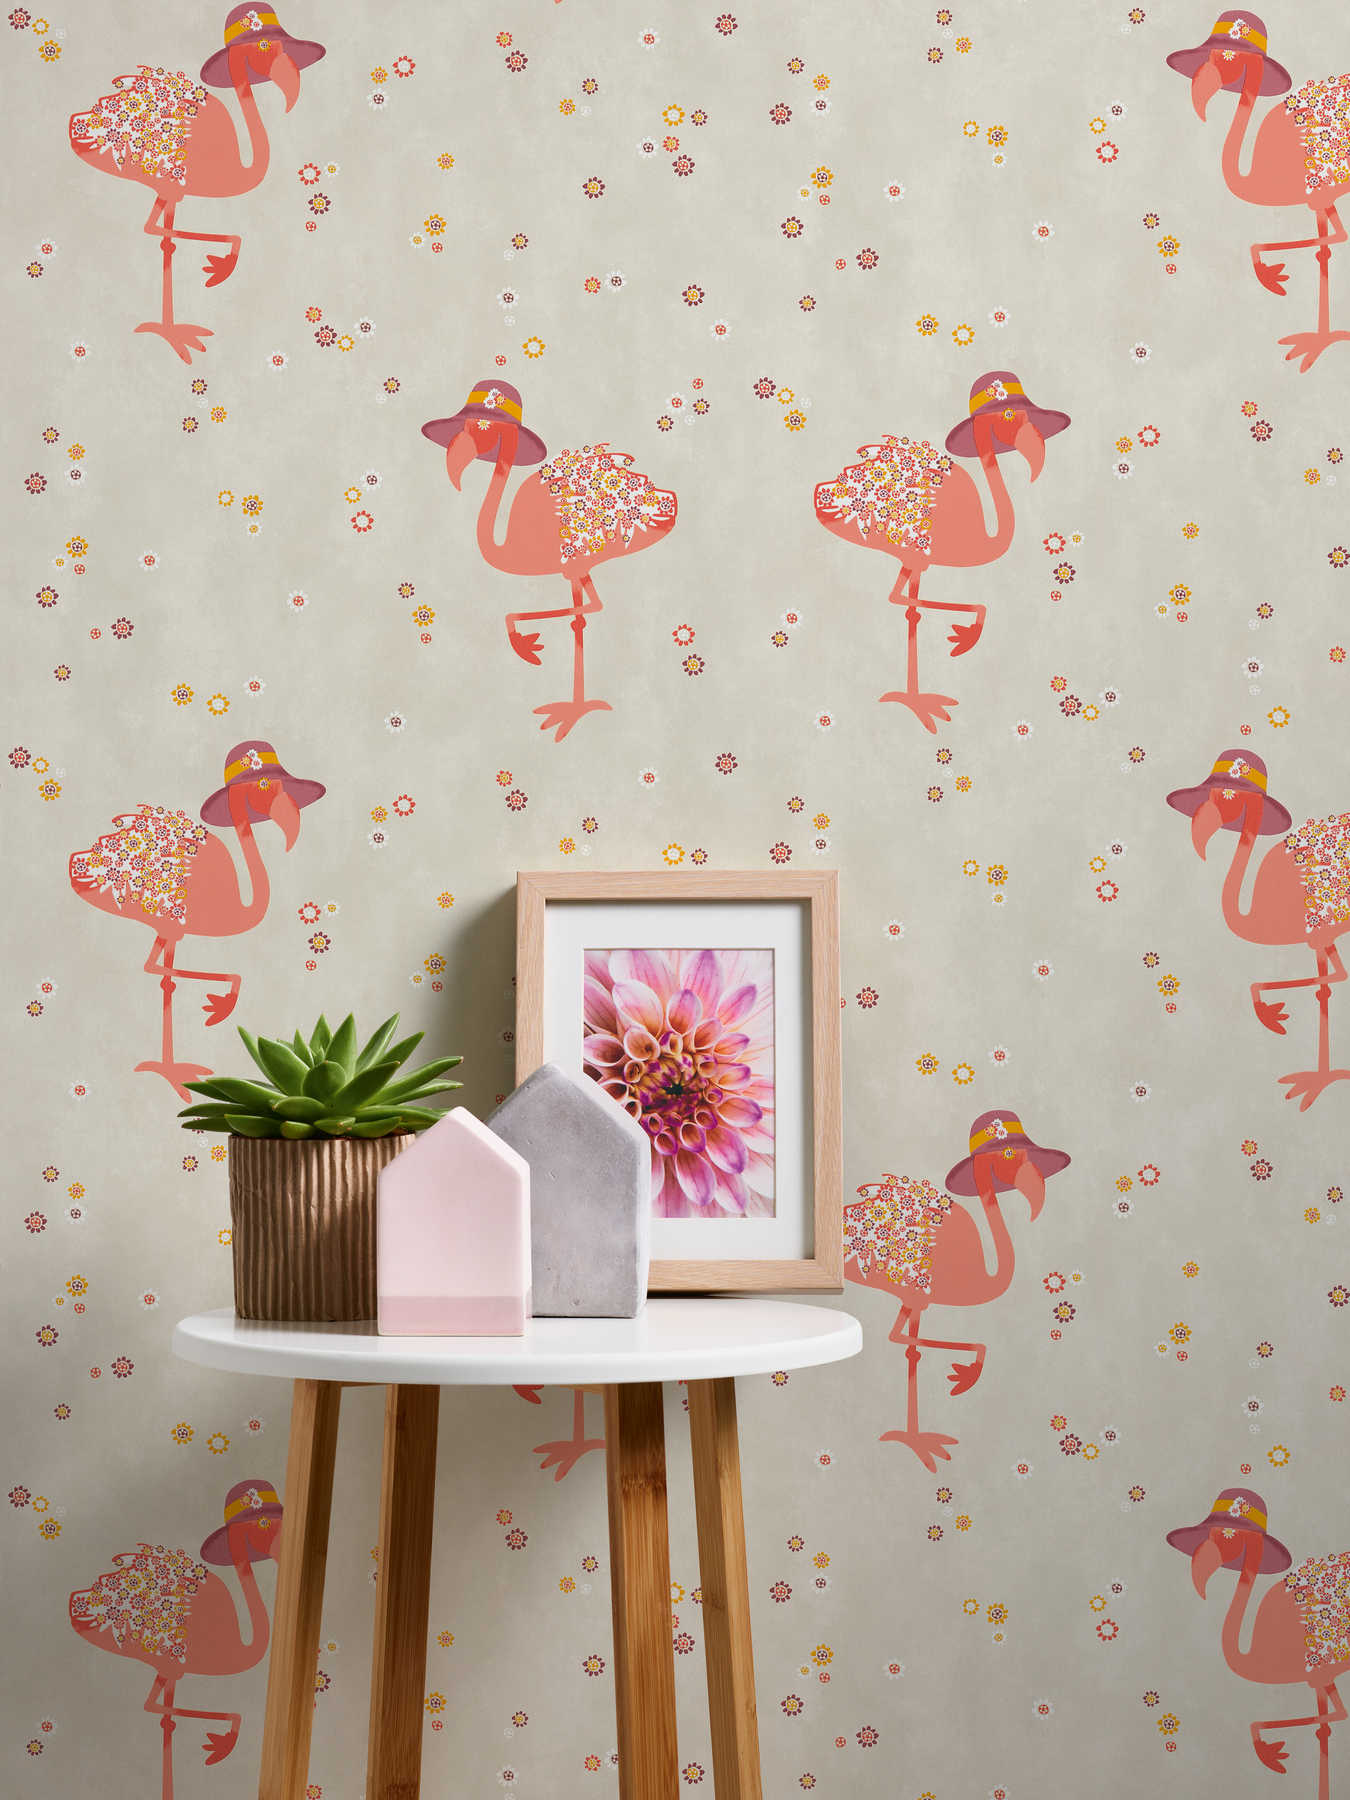             Flamingo non-woven wallpaper with flowers pattern for children - Beige, Orange
        